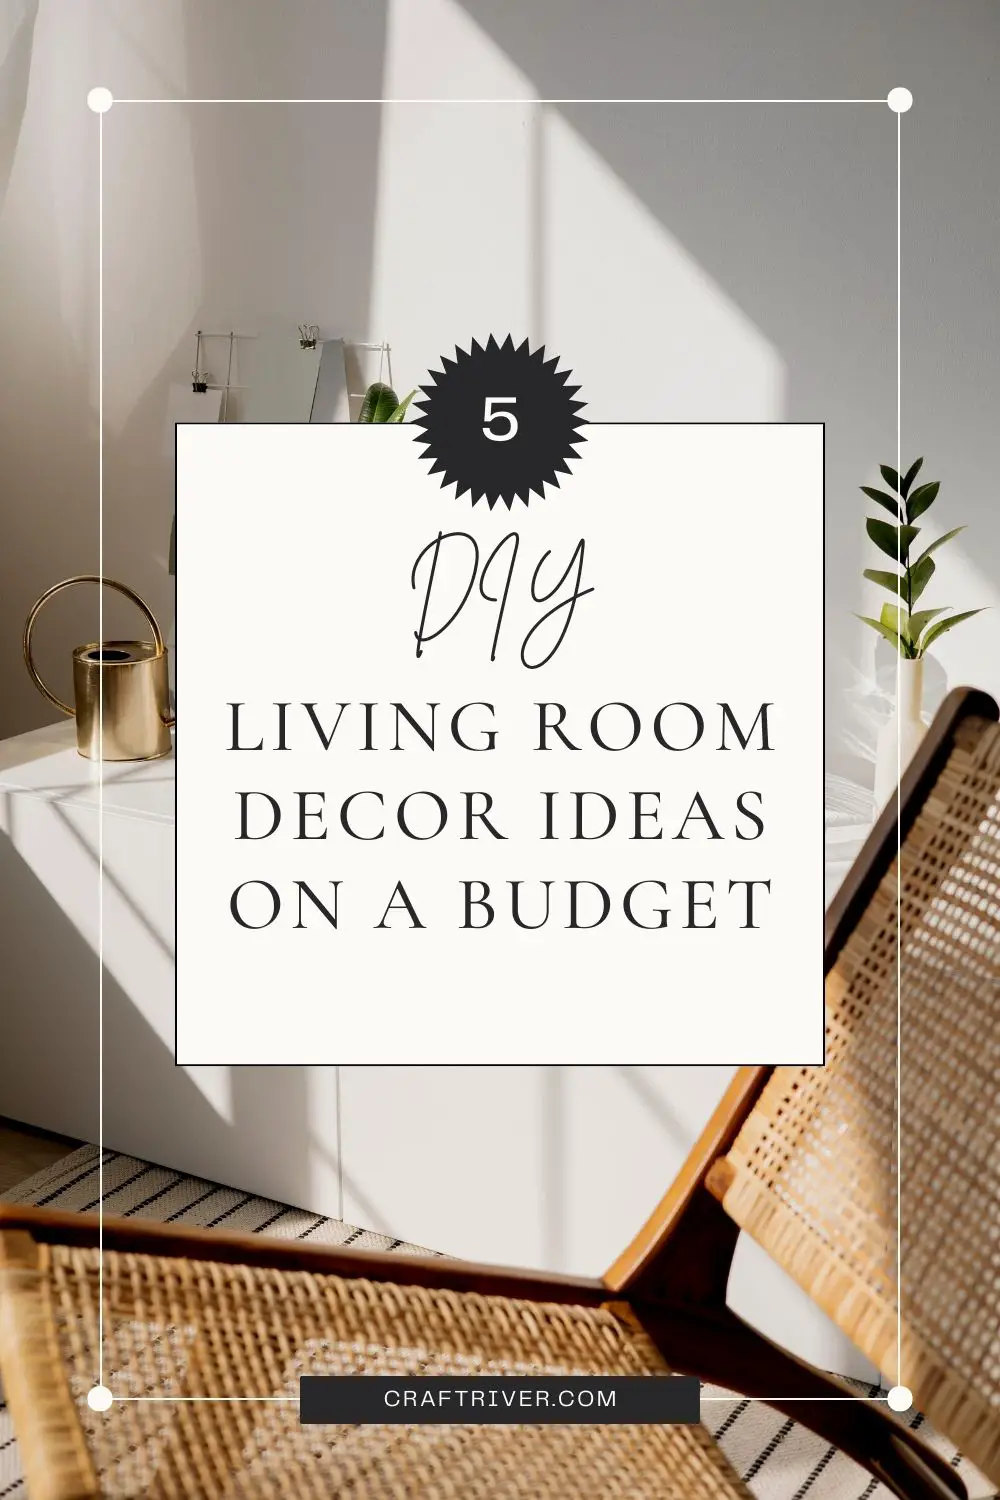 DIY Living Room Decor Ideas on a Budget